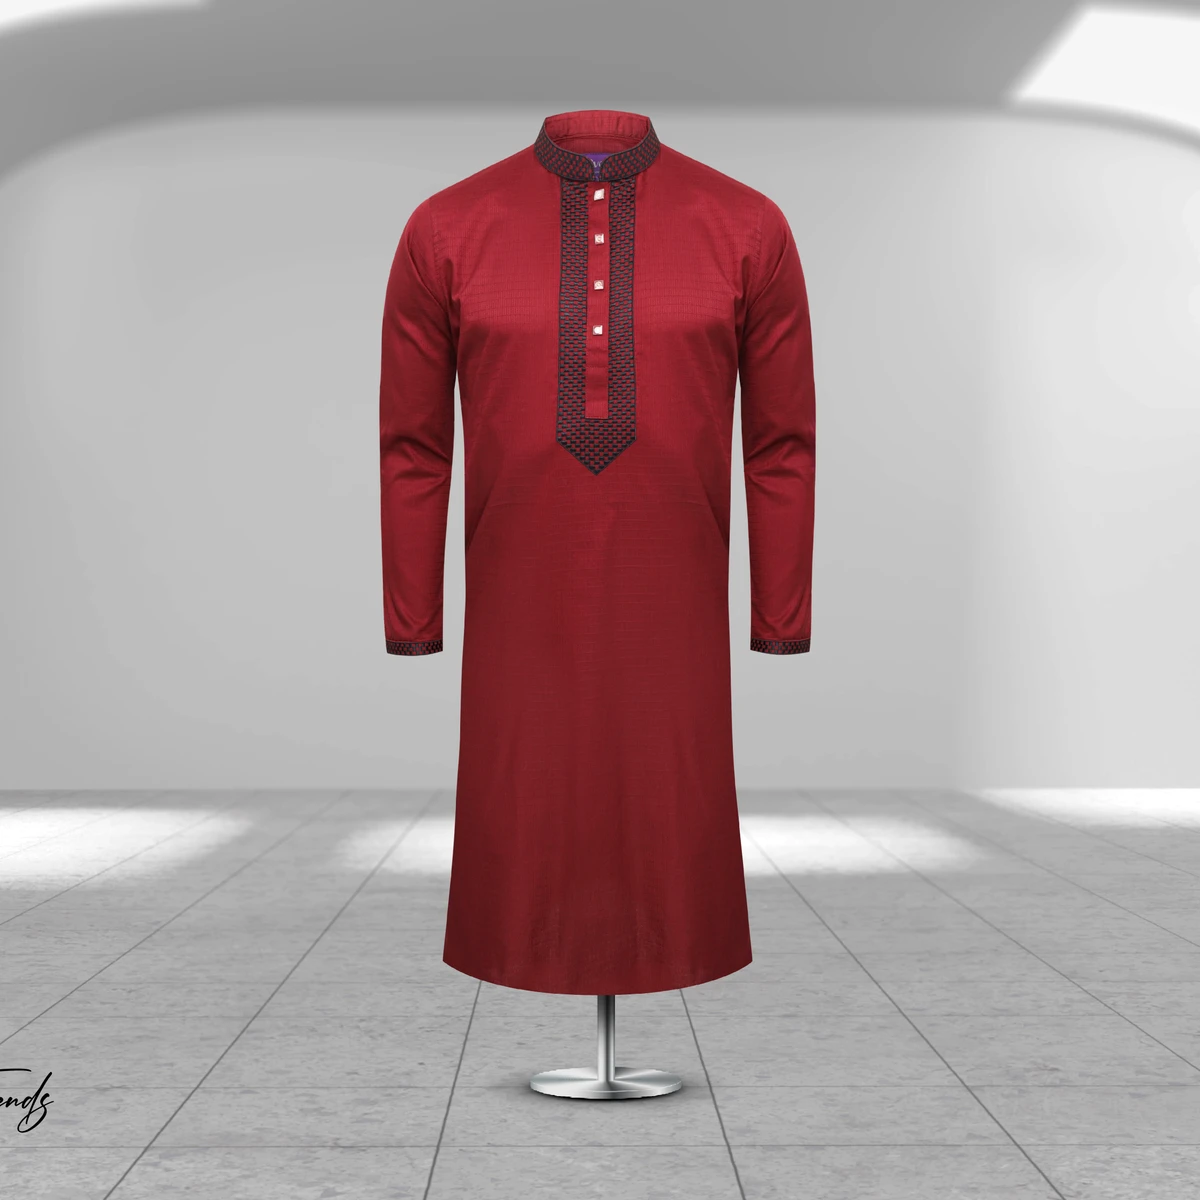 Smart Fancy Cotton Design Panjabi - Red Maroon (Code-43)